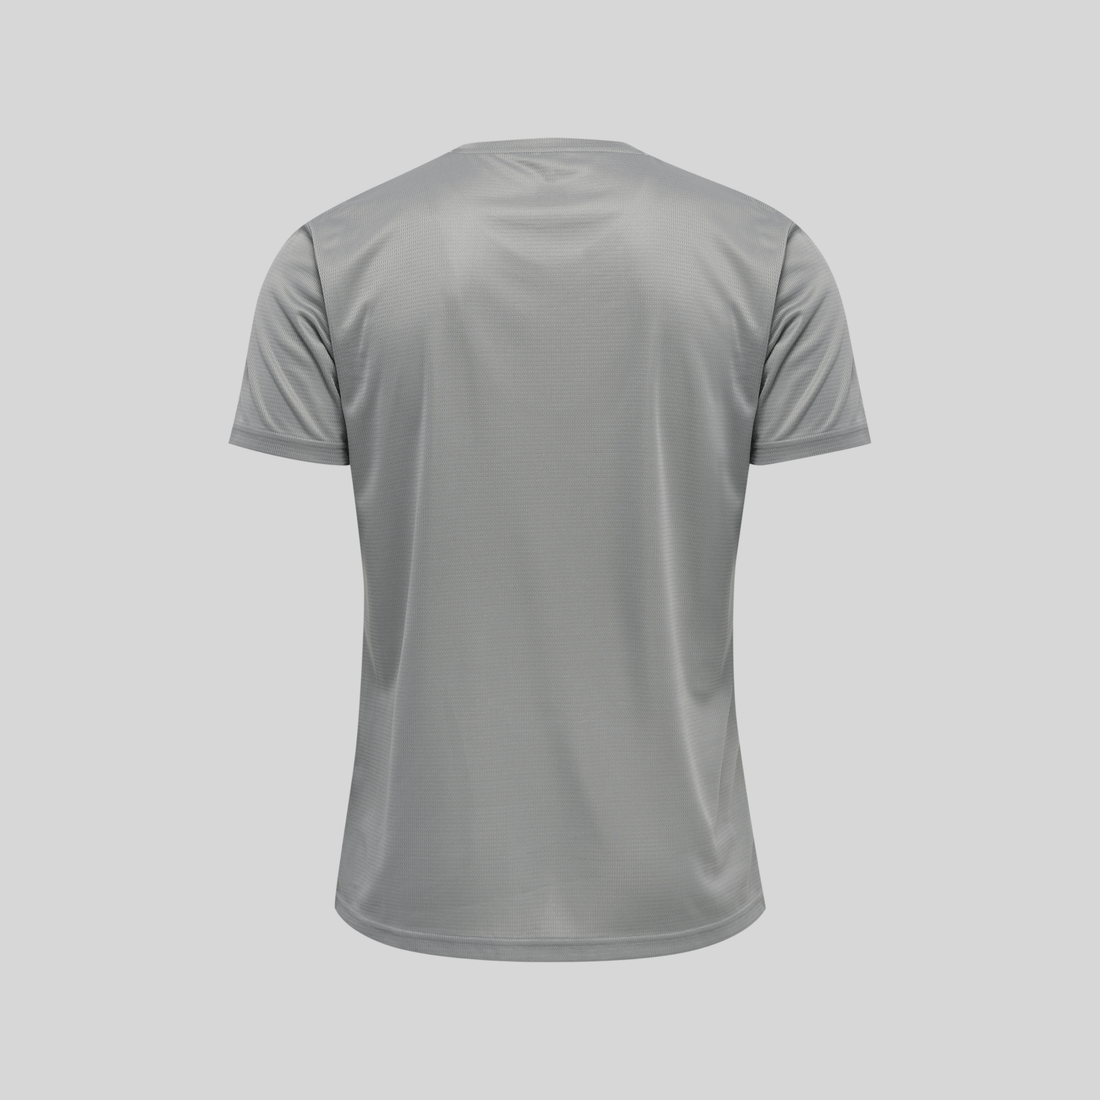 Vigor Tshirt Grey Men's - Sports Cartel